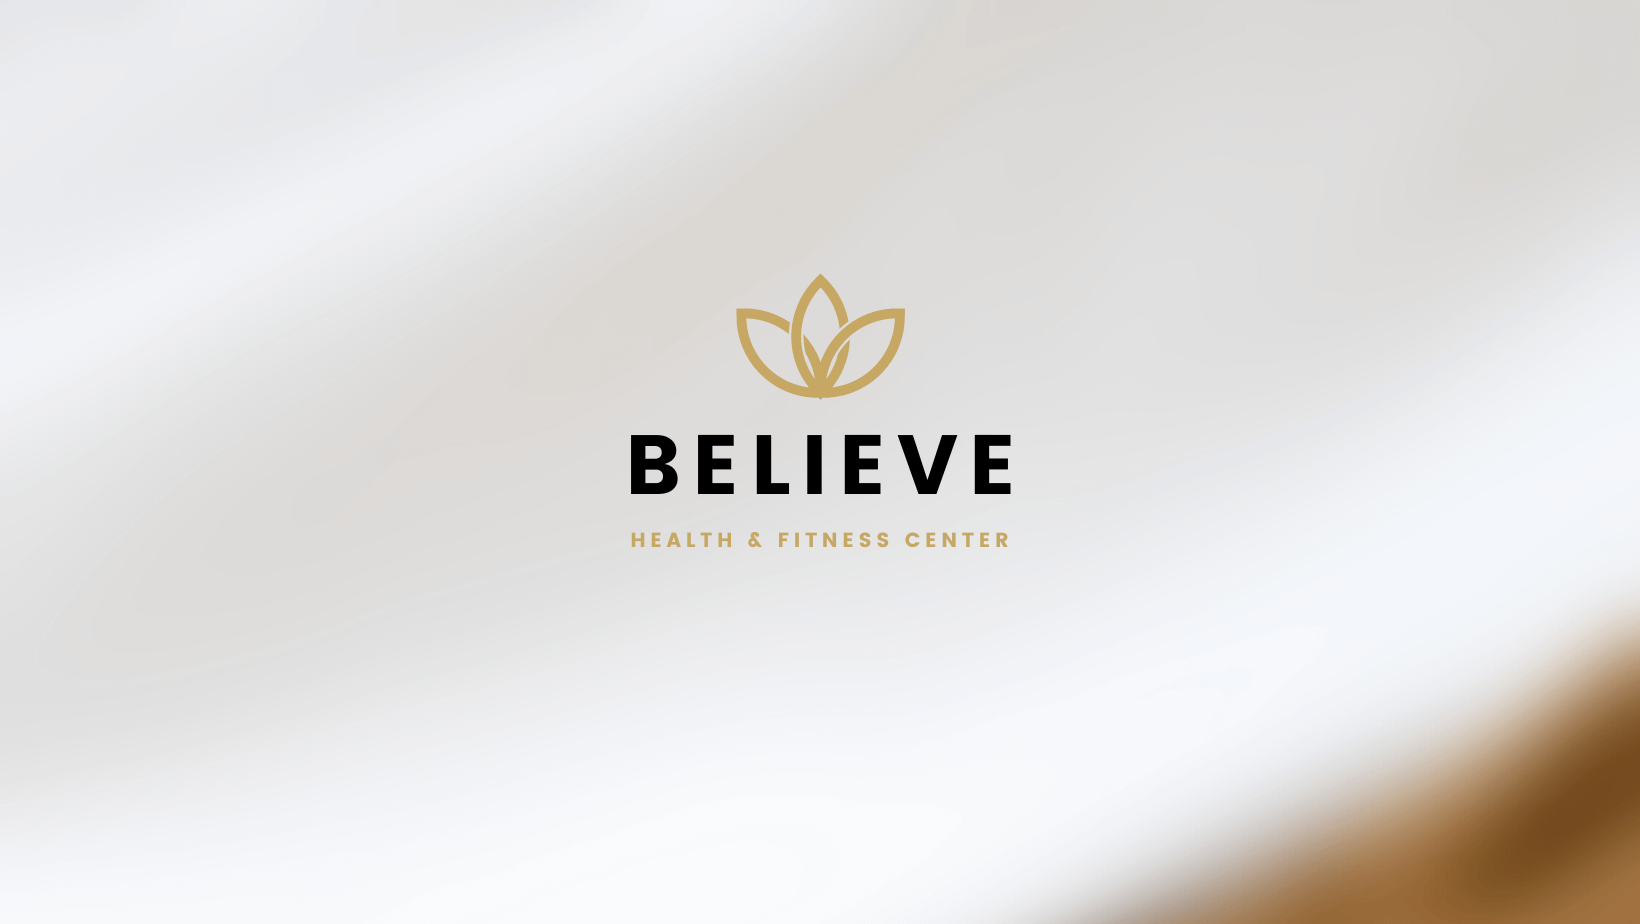 Believe Health & Fitness Center